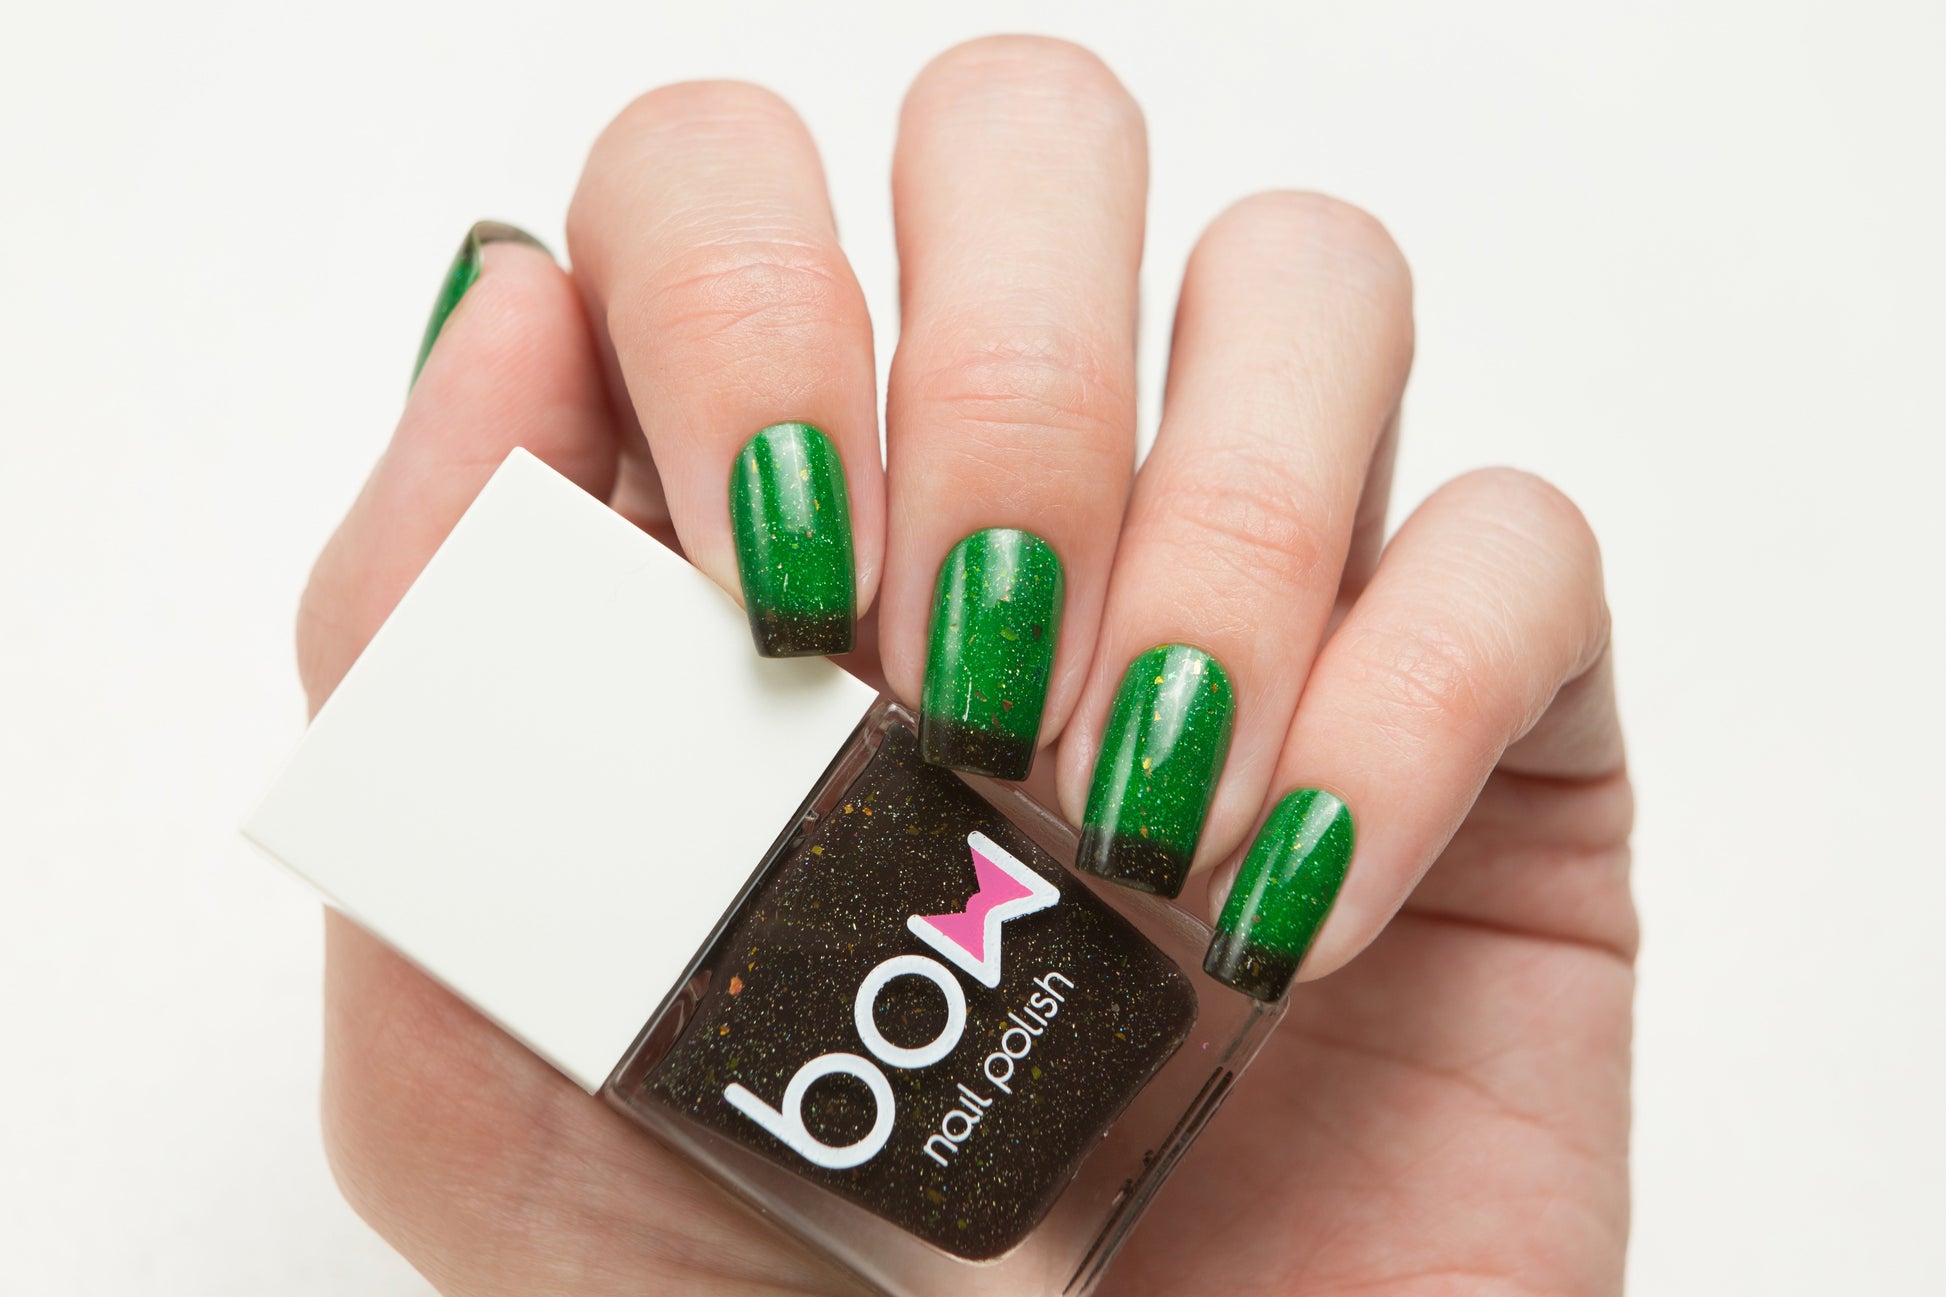 Lollipolish bow polish Bright Green Swampy Green thermal nail polish - Rewind